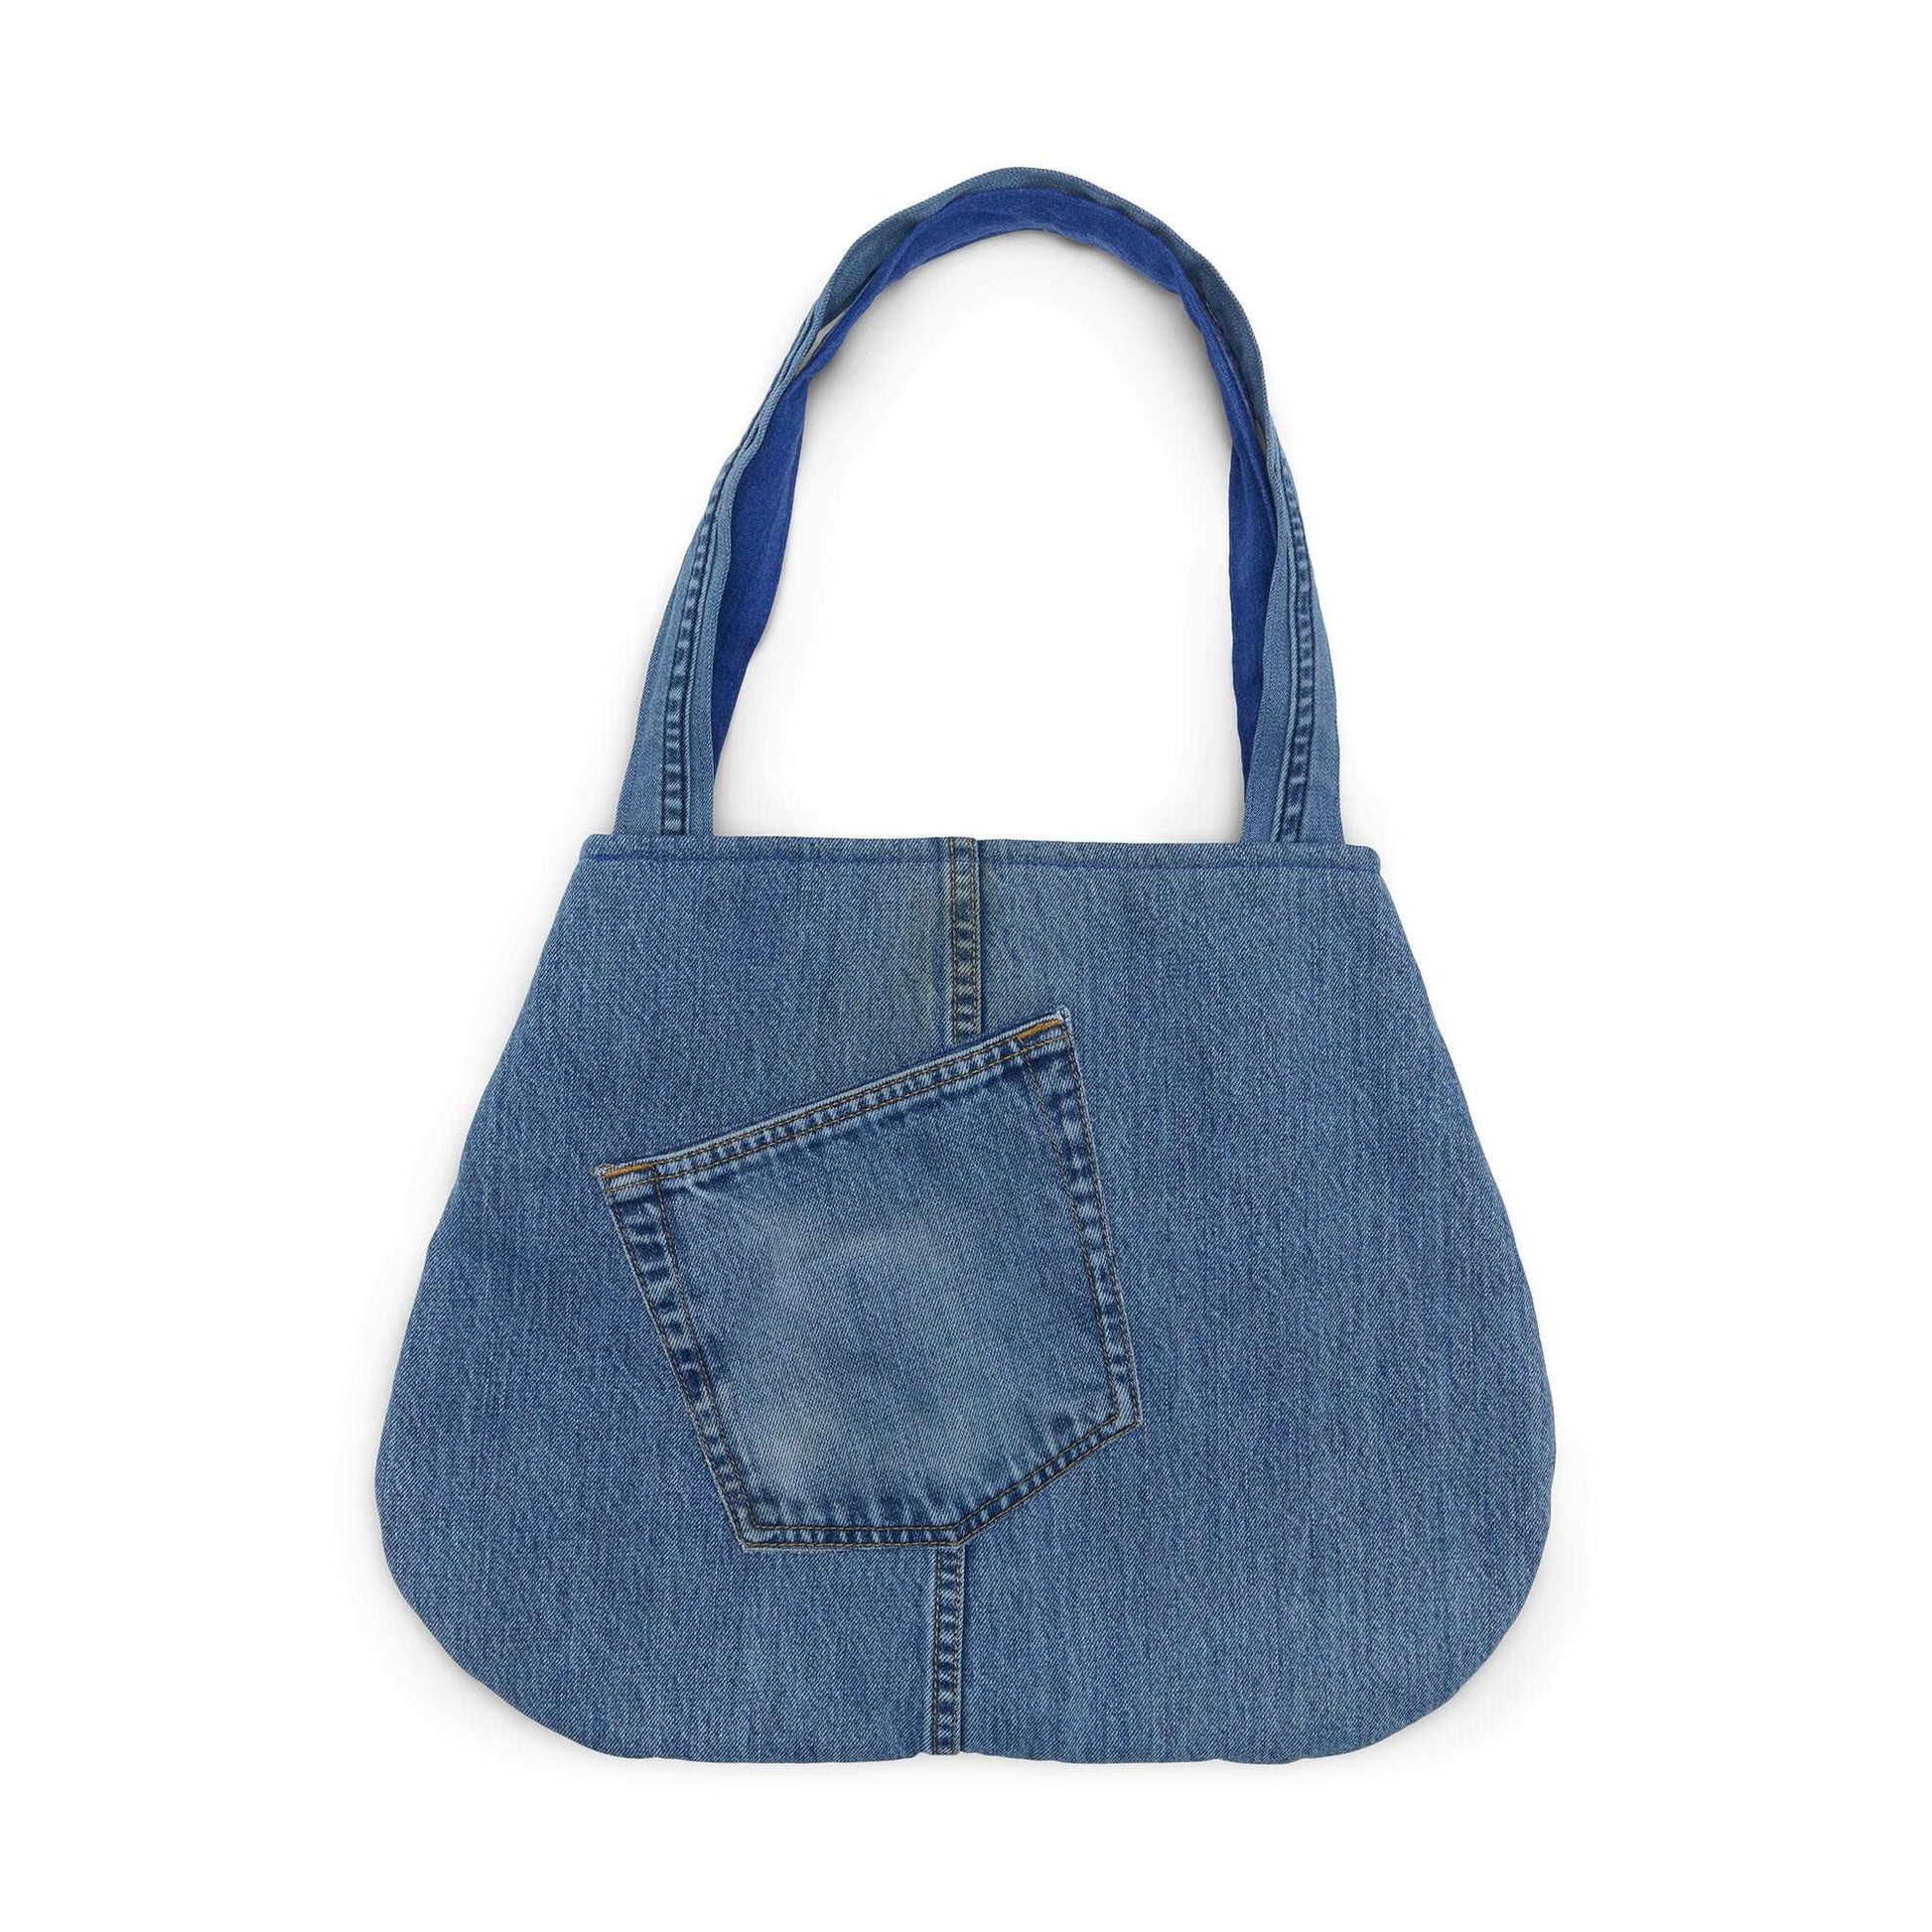 Free Coats Sewing & Clark Denim Blues Bag Pattern